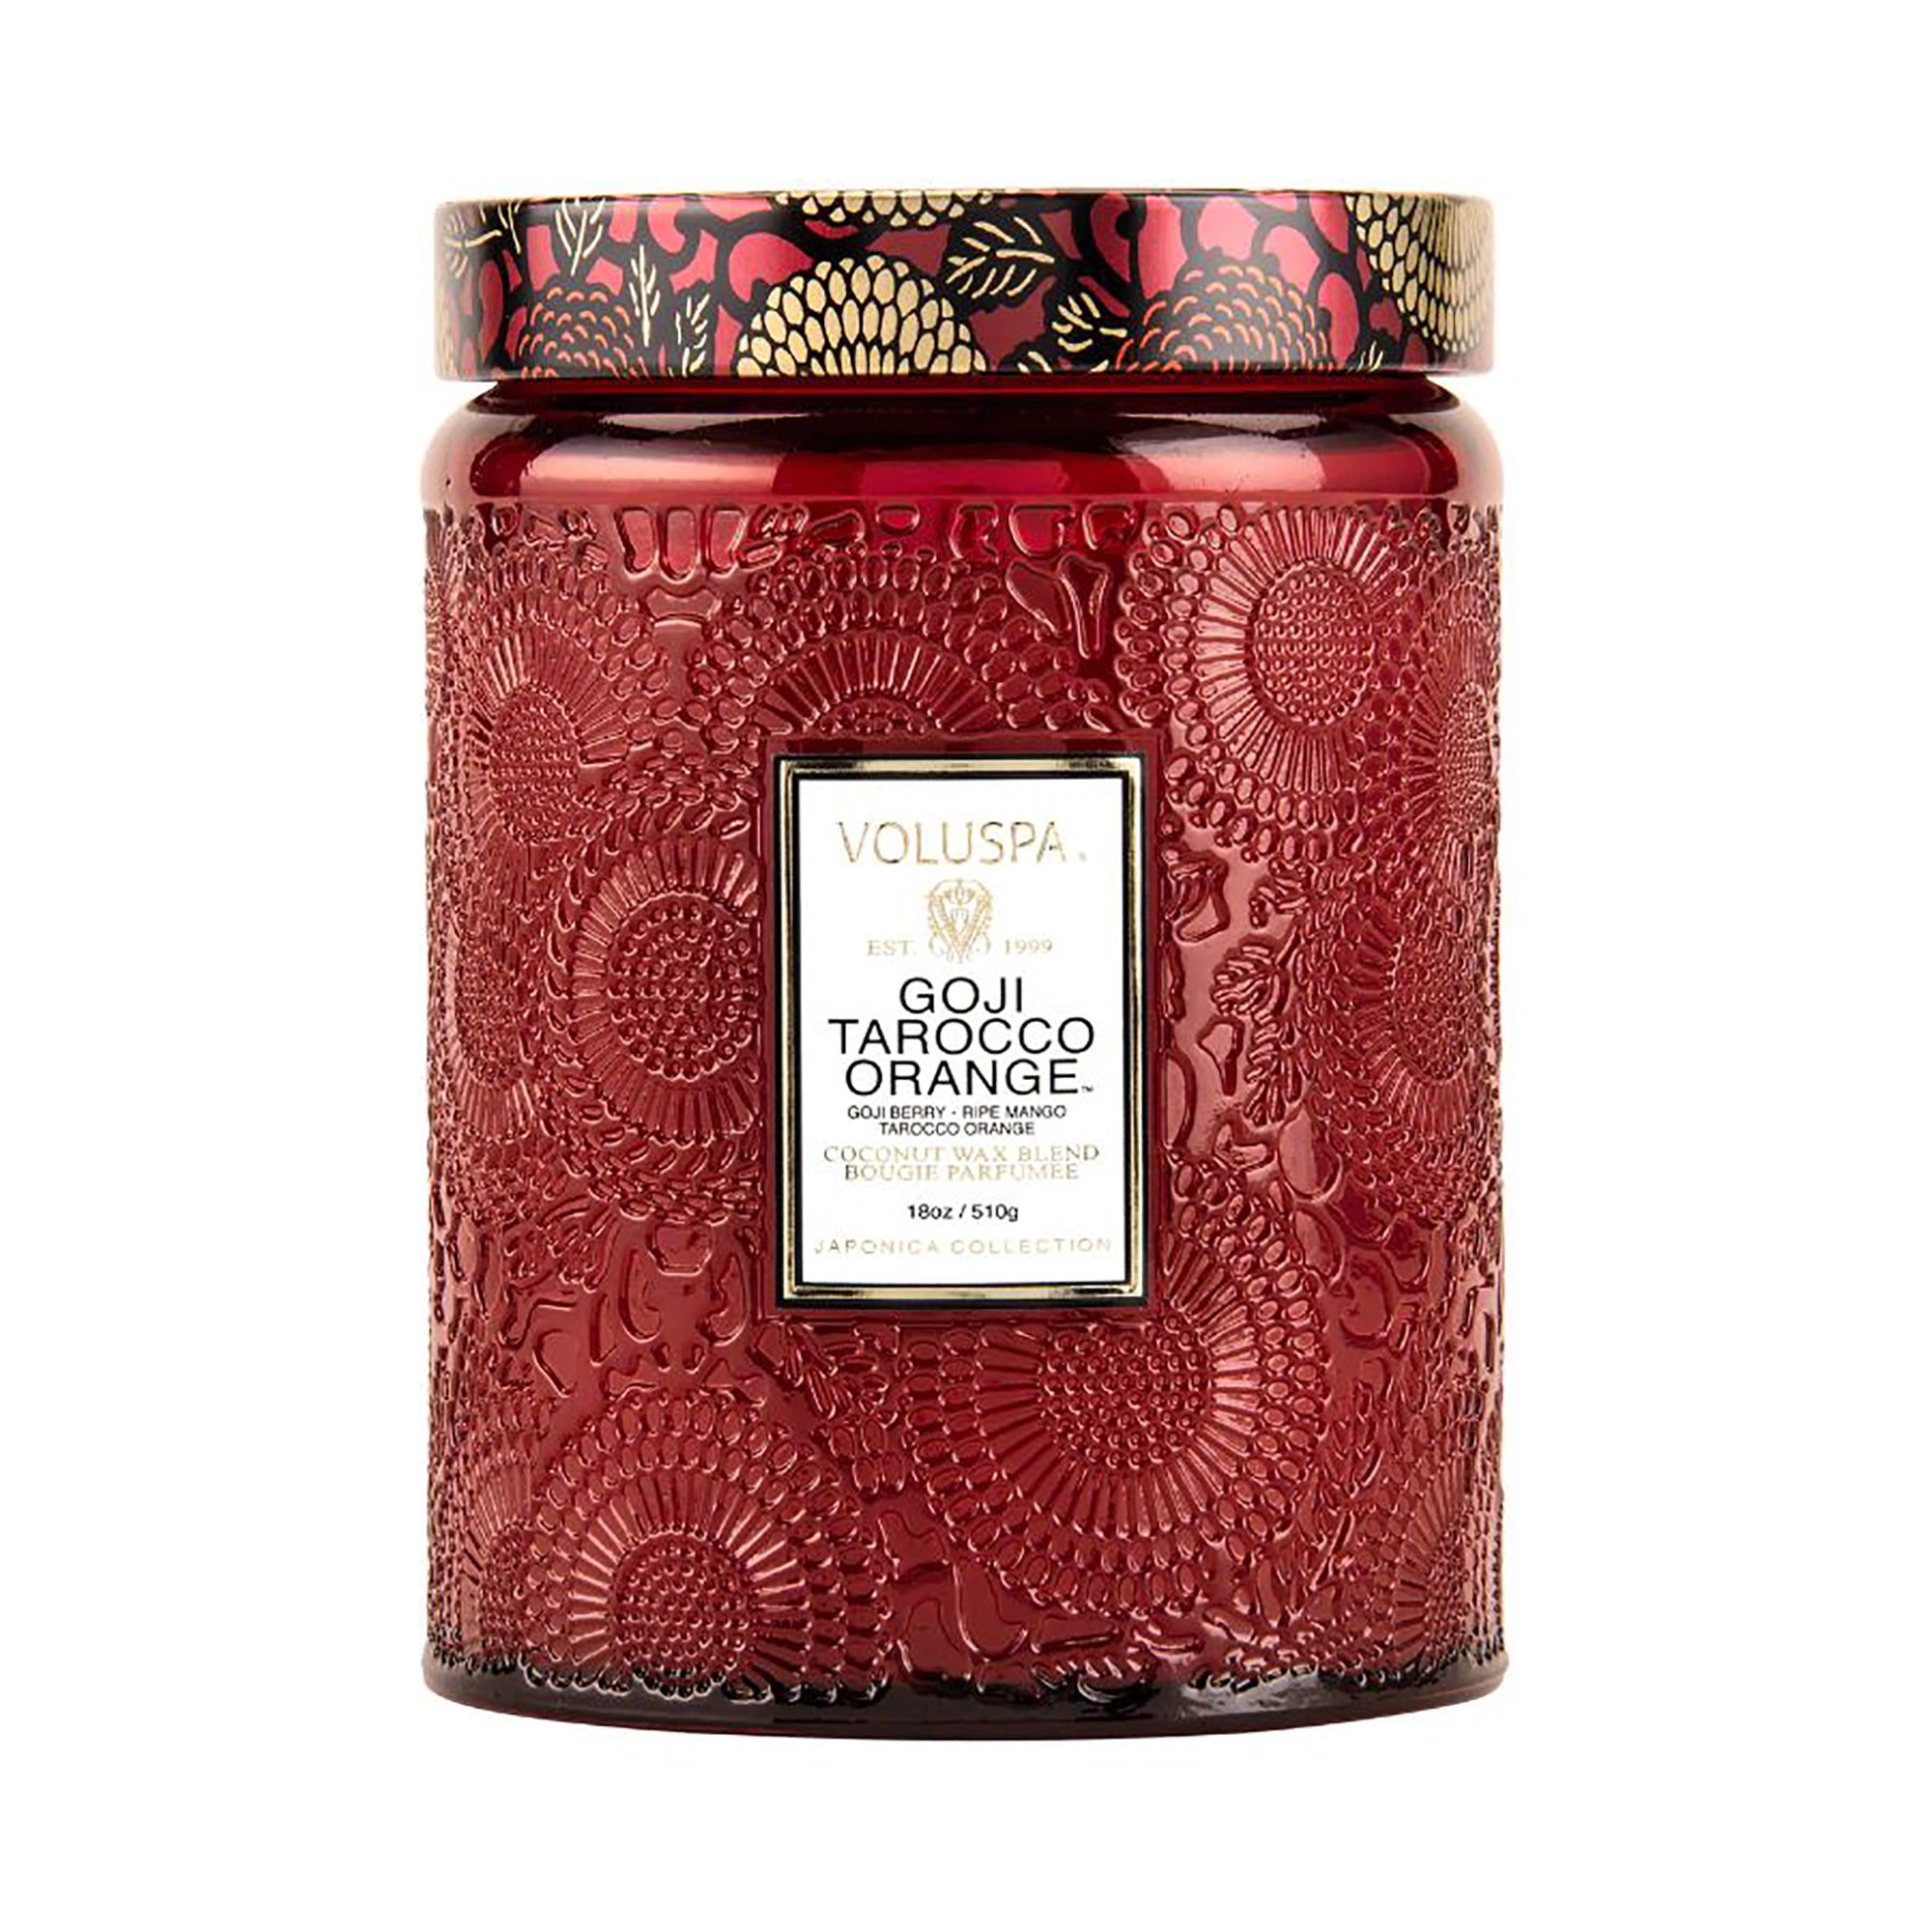 Voluspa Japonica Large Jar Candle 18oz / GOJI TAROCCO